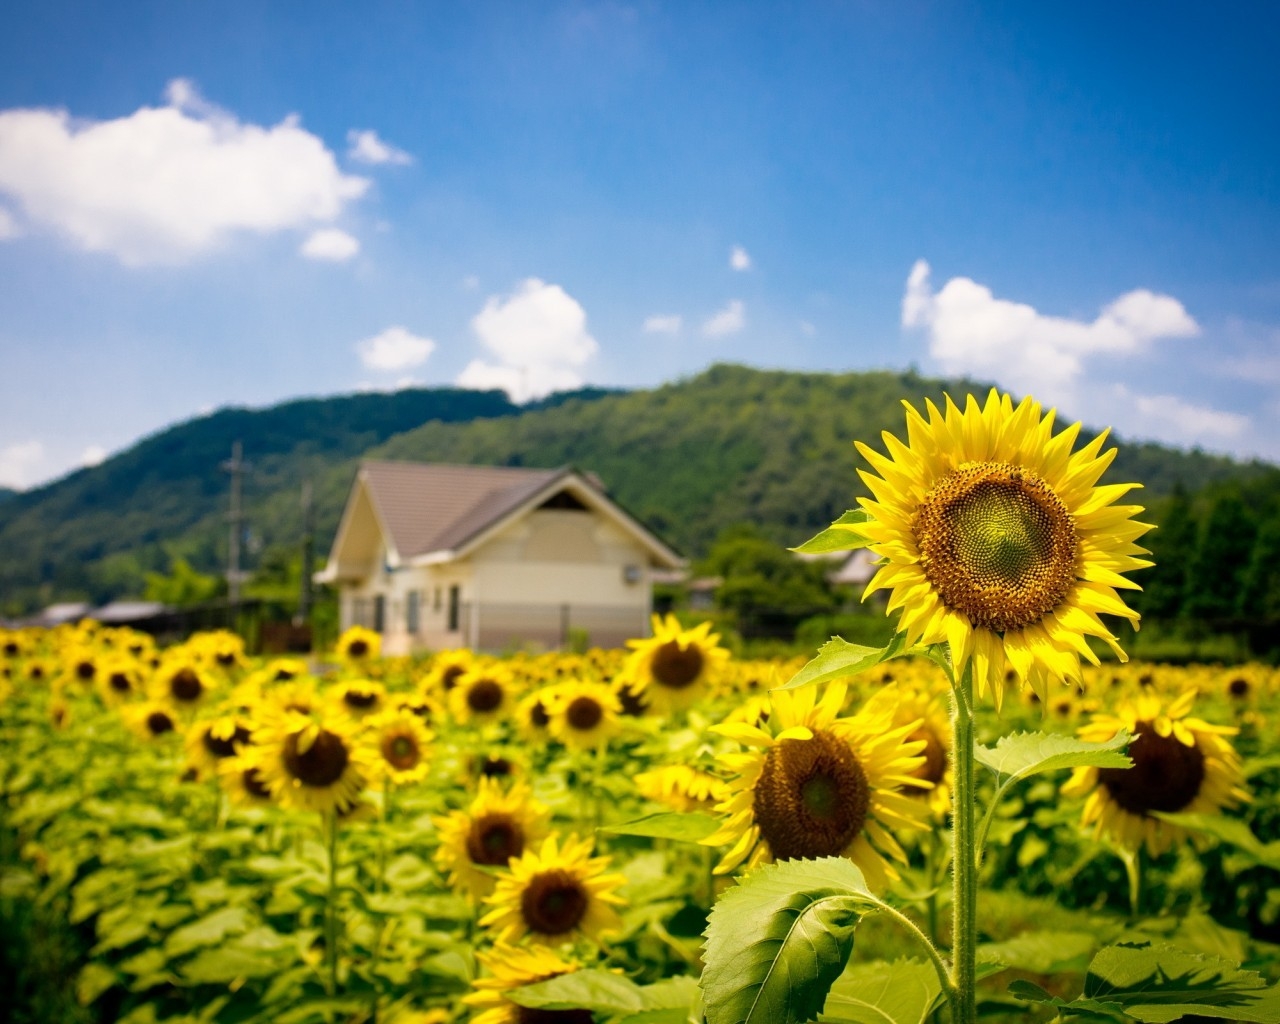 Sunflower Land for 1280 x 1024 resolution